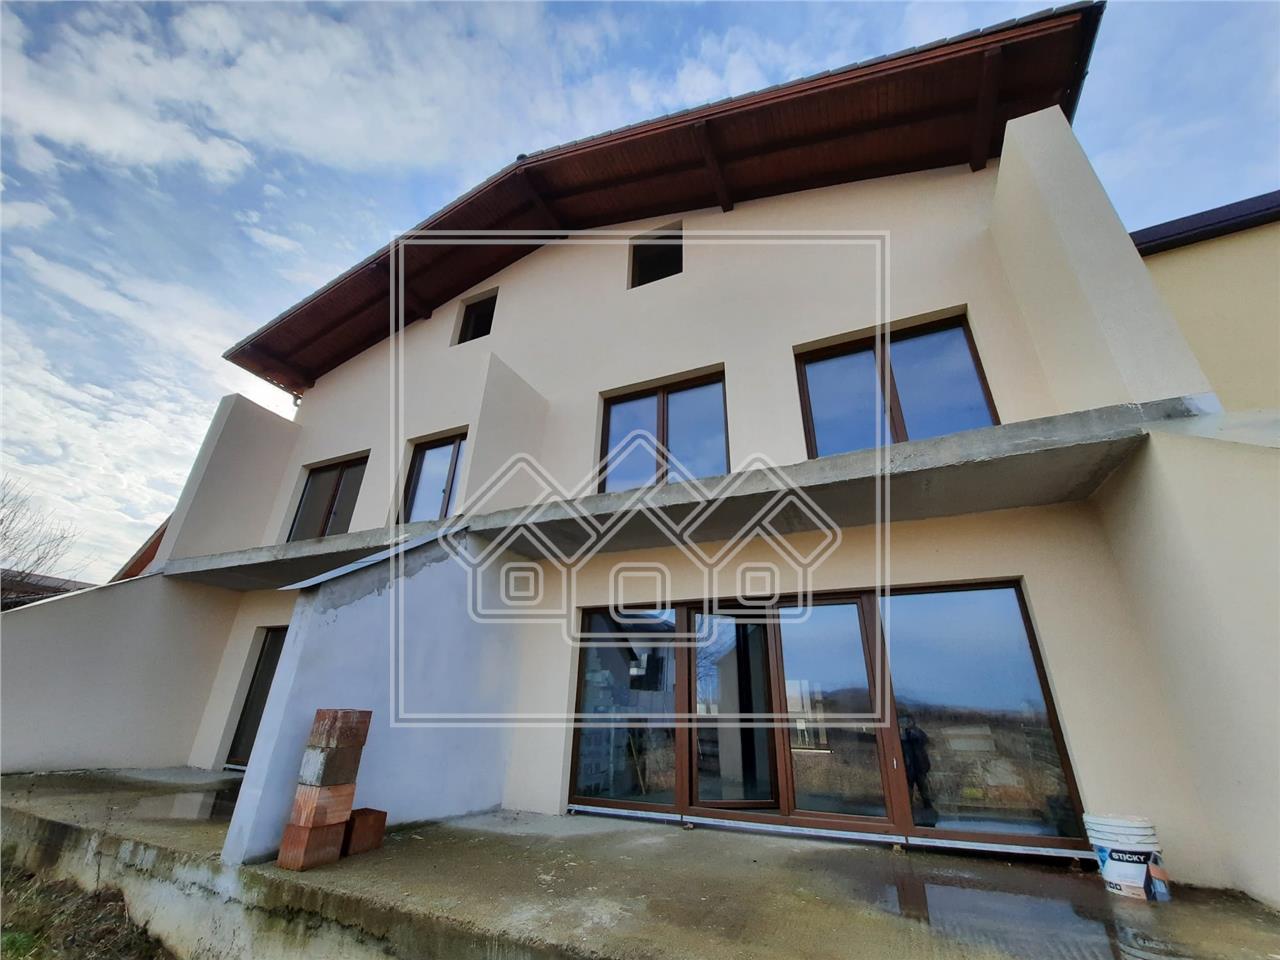 House for sale in Sibiu -duplex-240 sqm usable-yard-2 baths- Selimbar